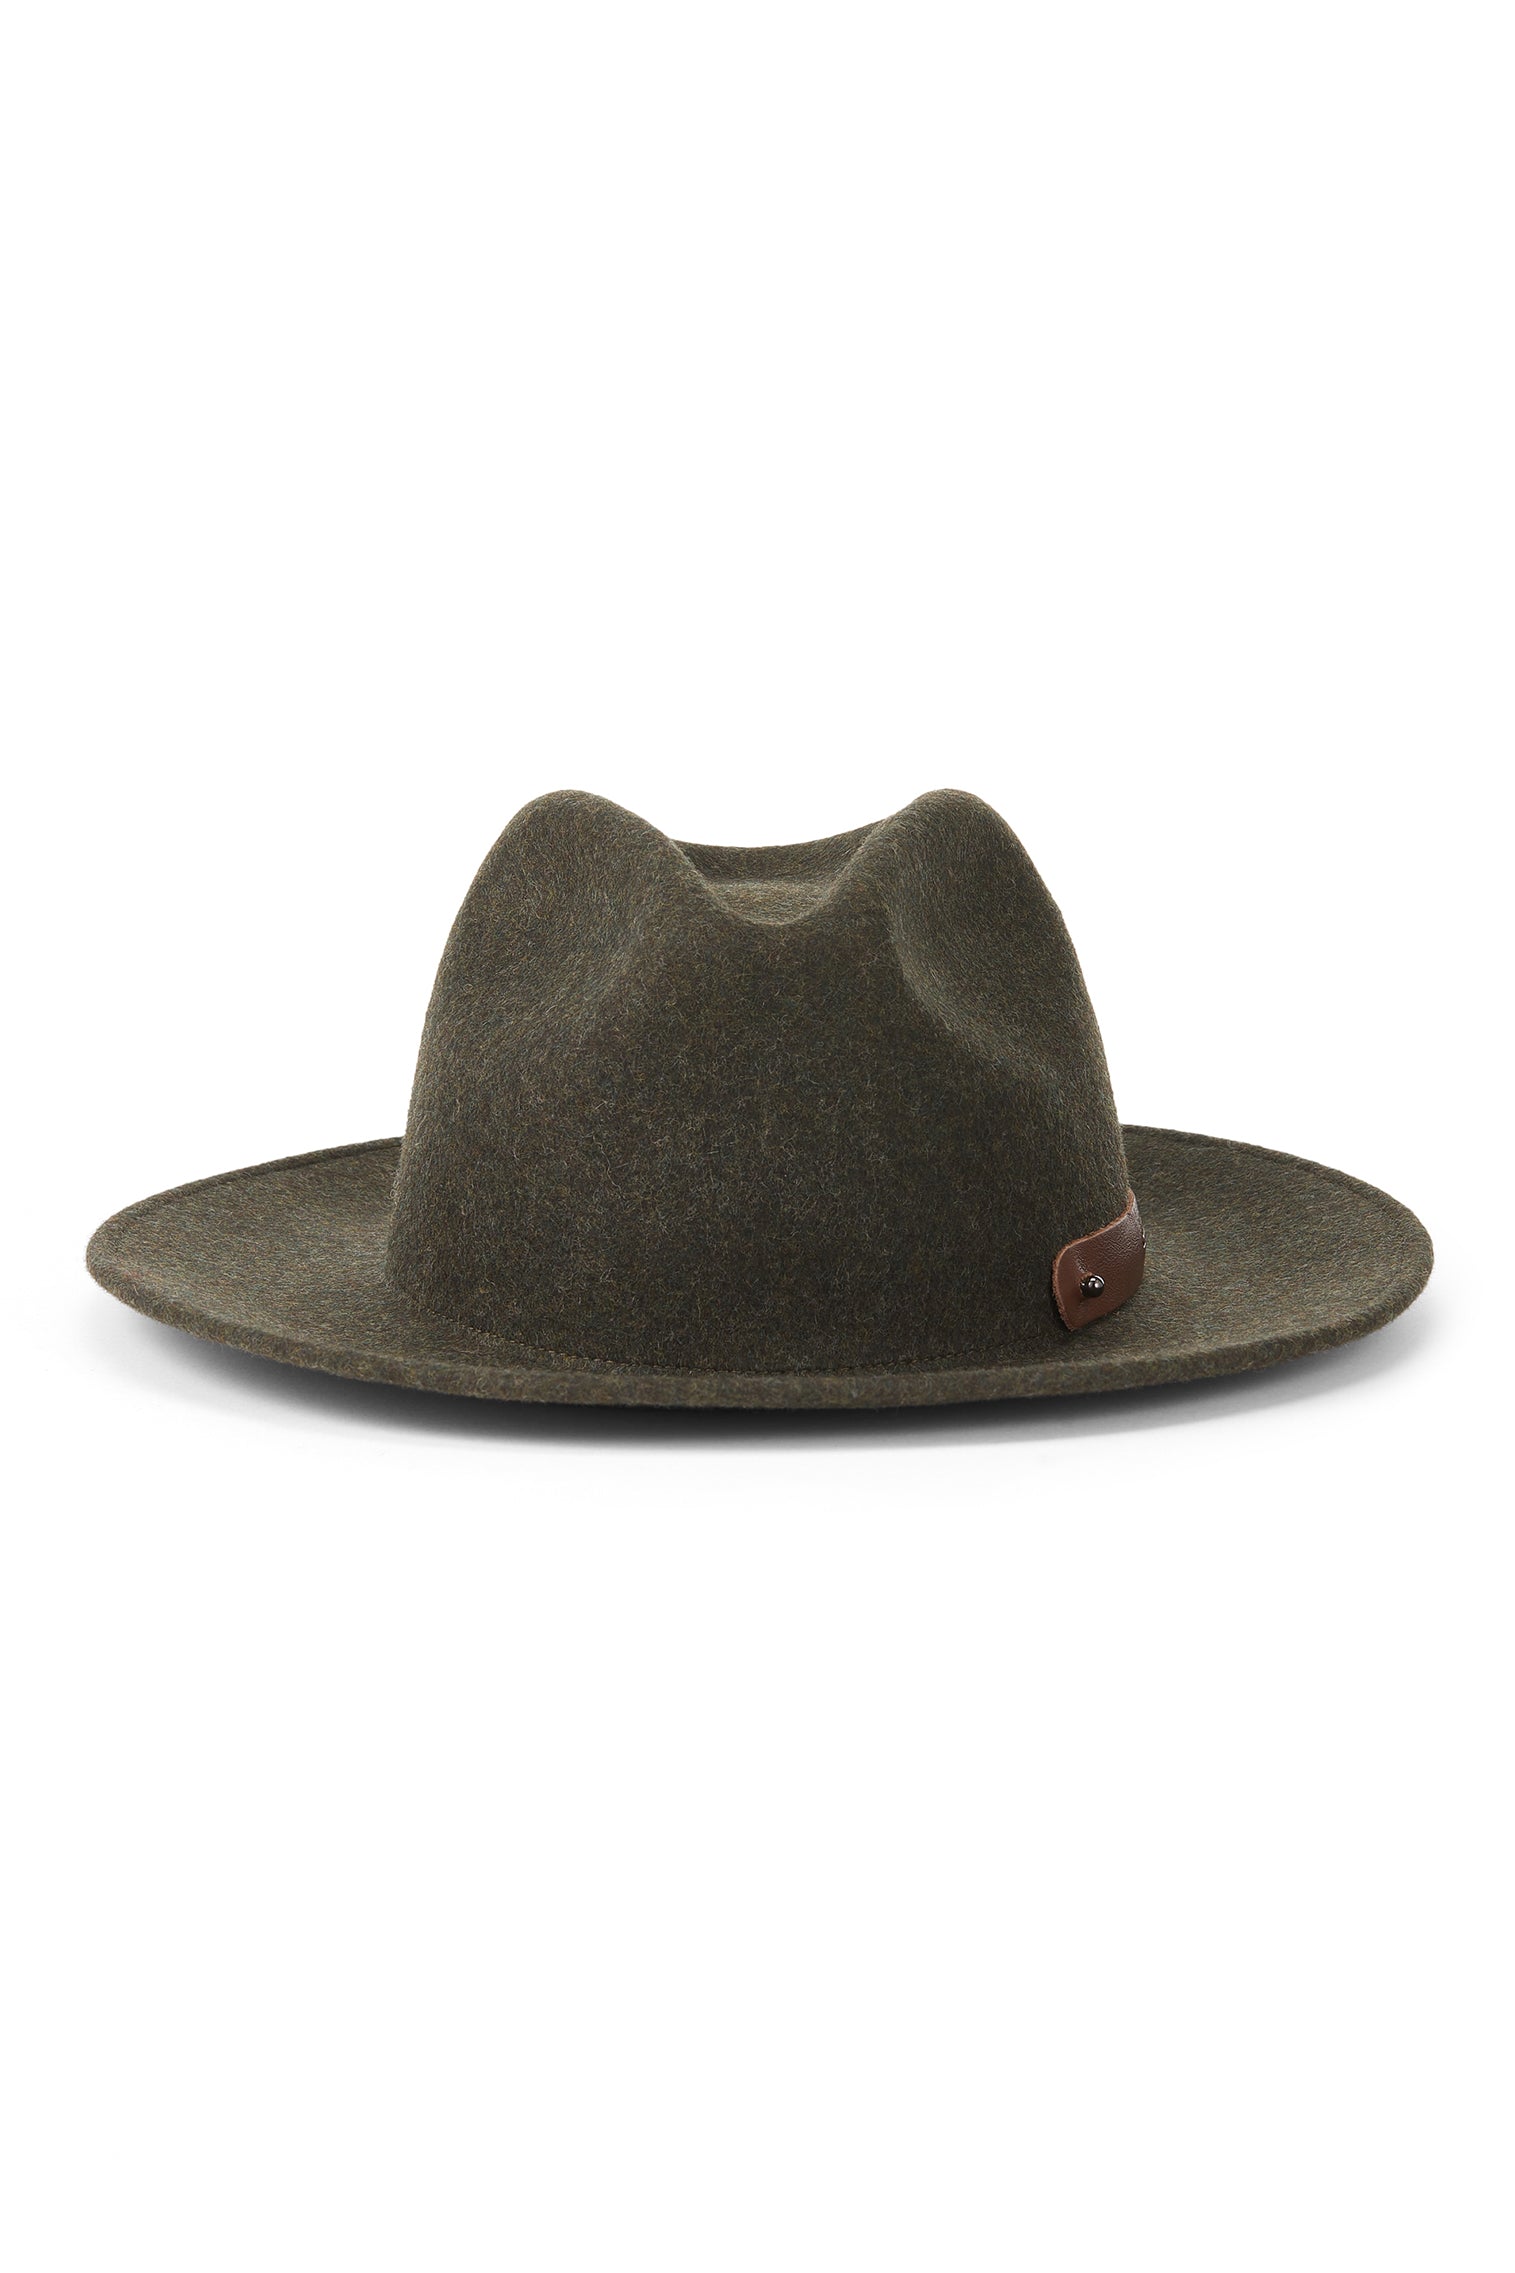 Cheltenham Rollable Trilby - Women’s Hats - Lock & Co. Hatters London UK